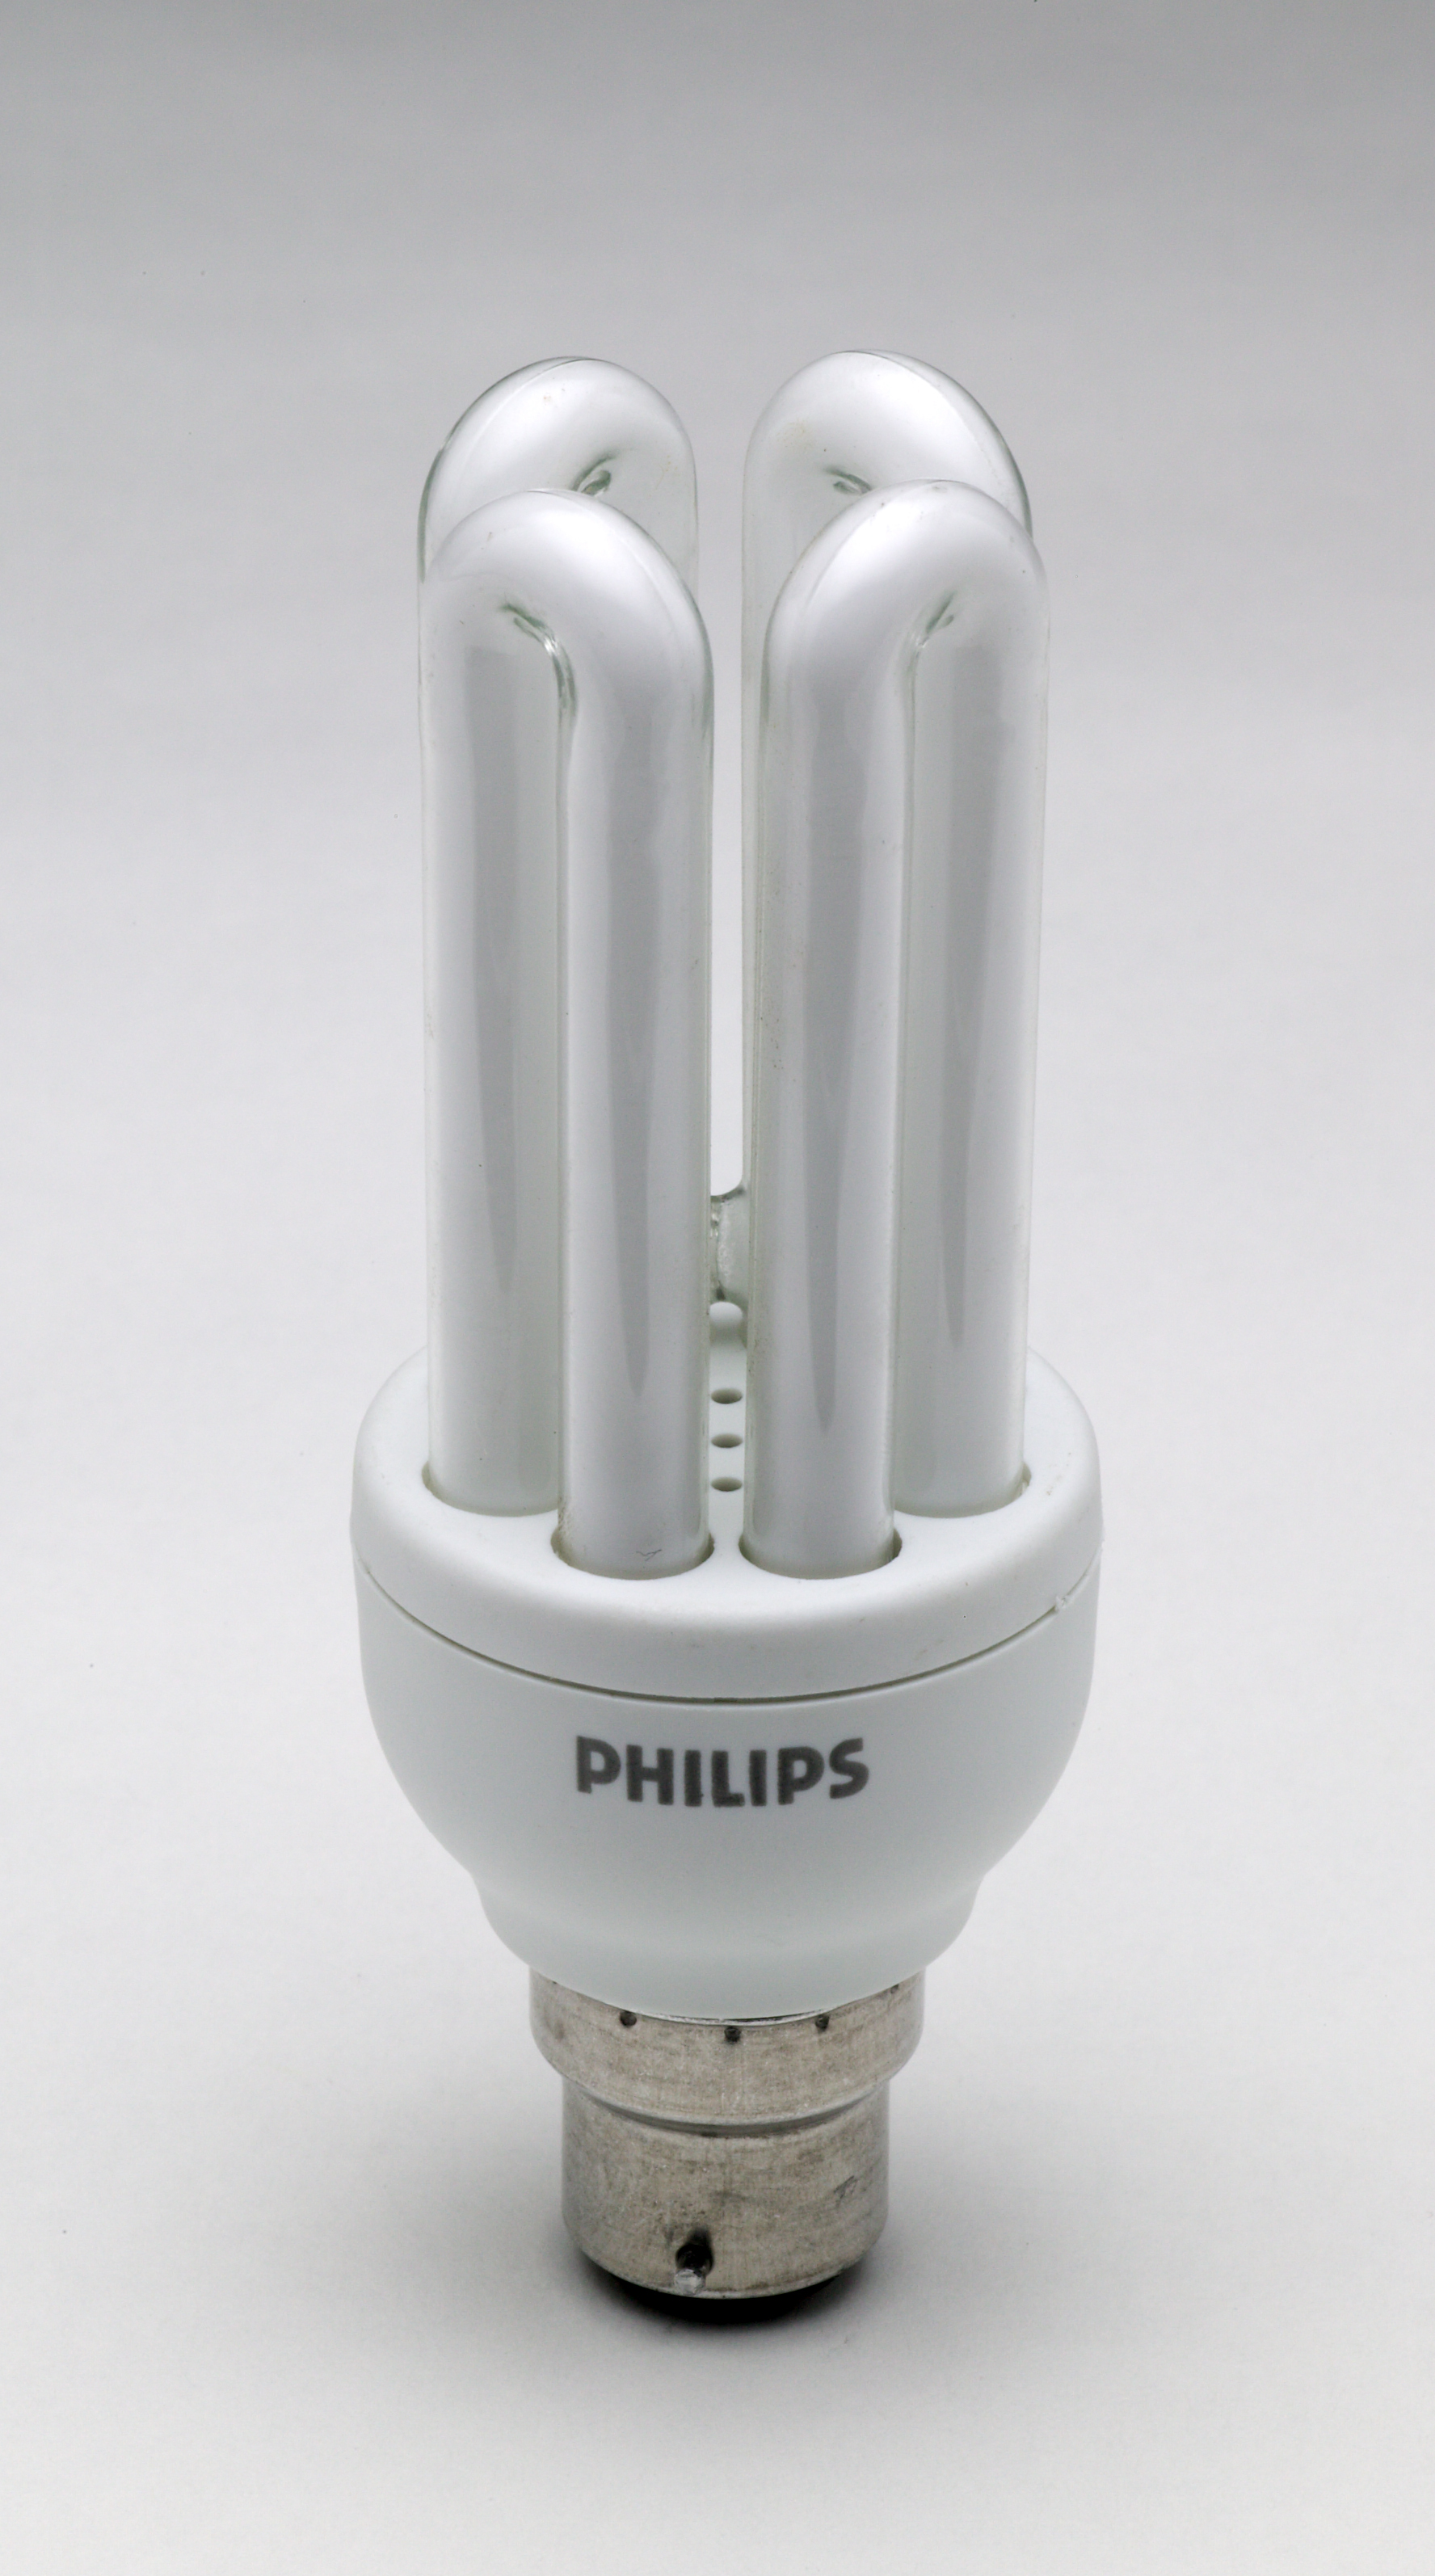 Philips Genie 18W compact fluorescent light globes (CFL)